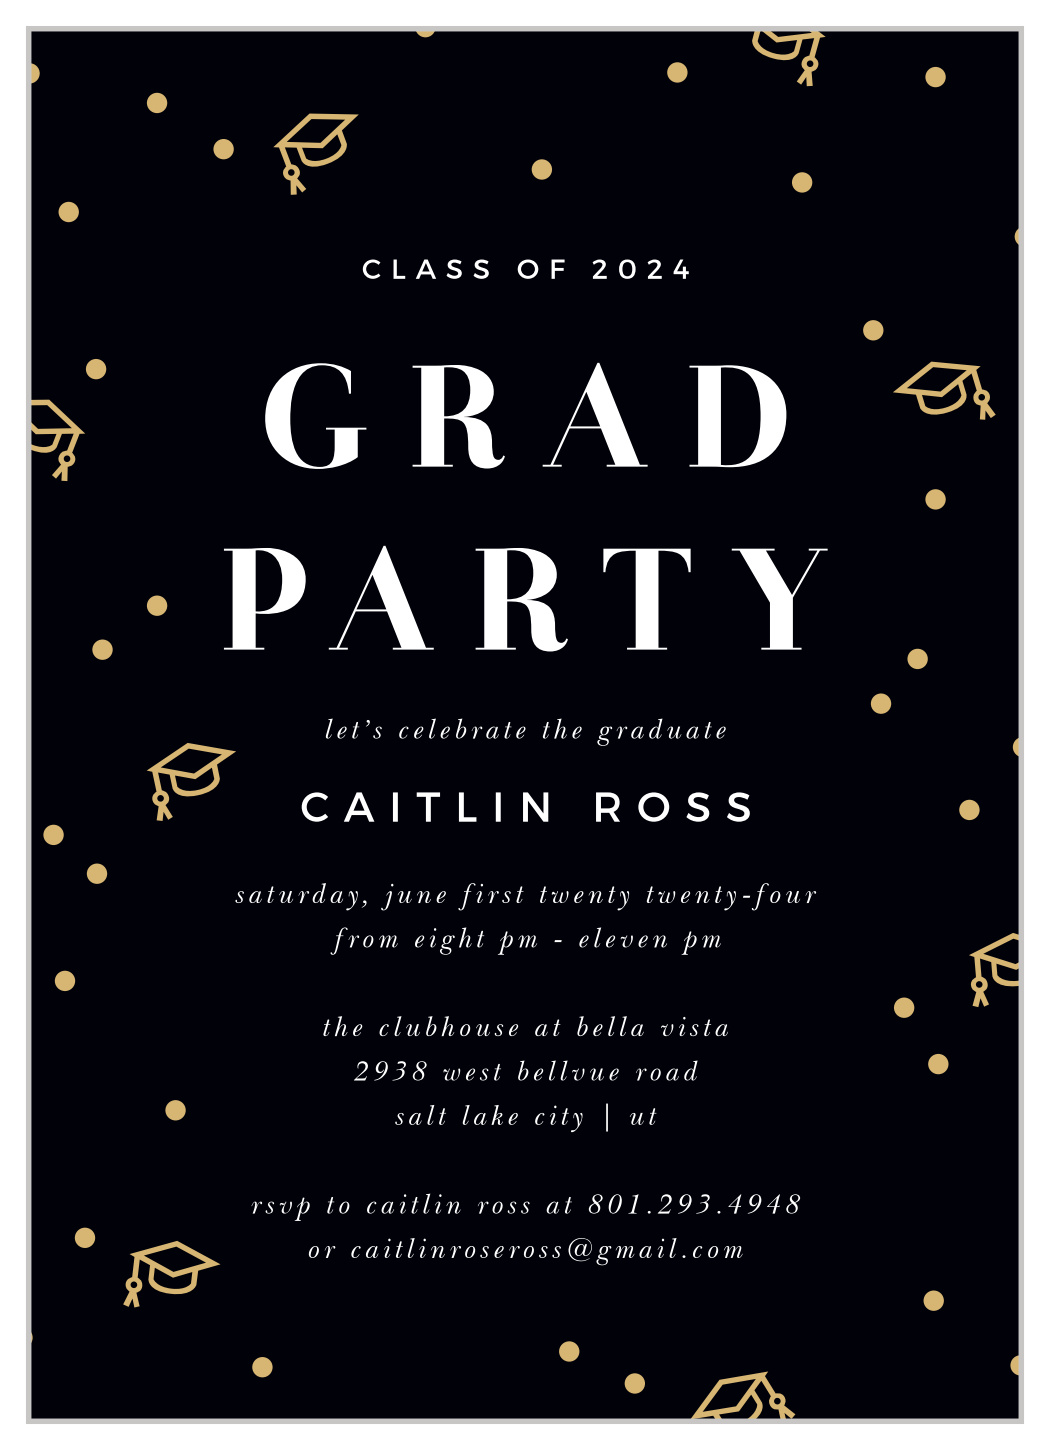 Grad Hats Graduation Invitations by Basic Invite